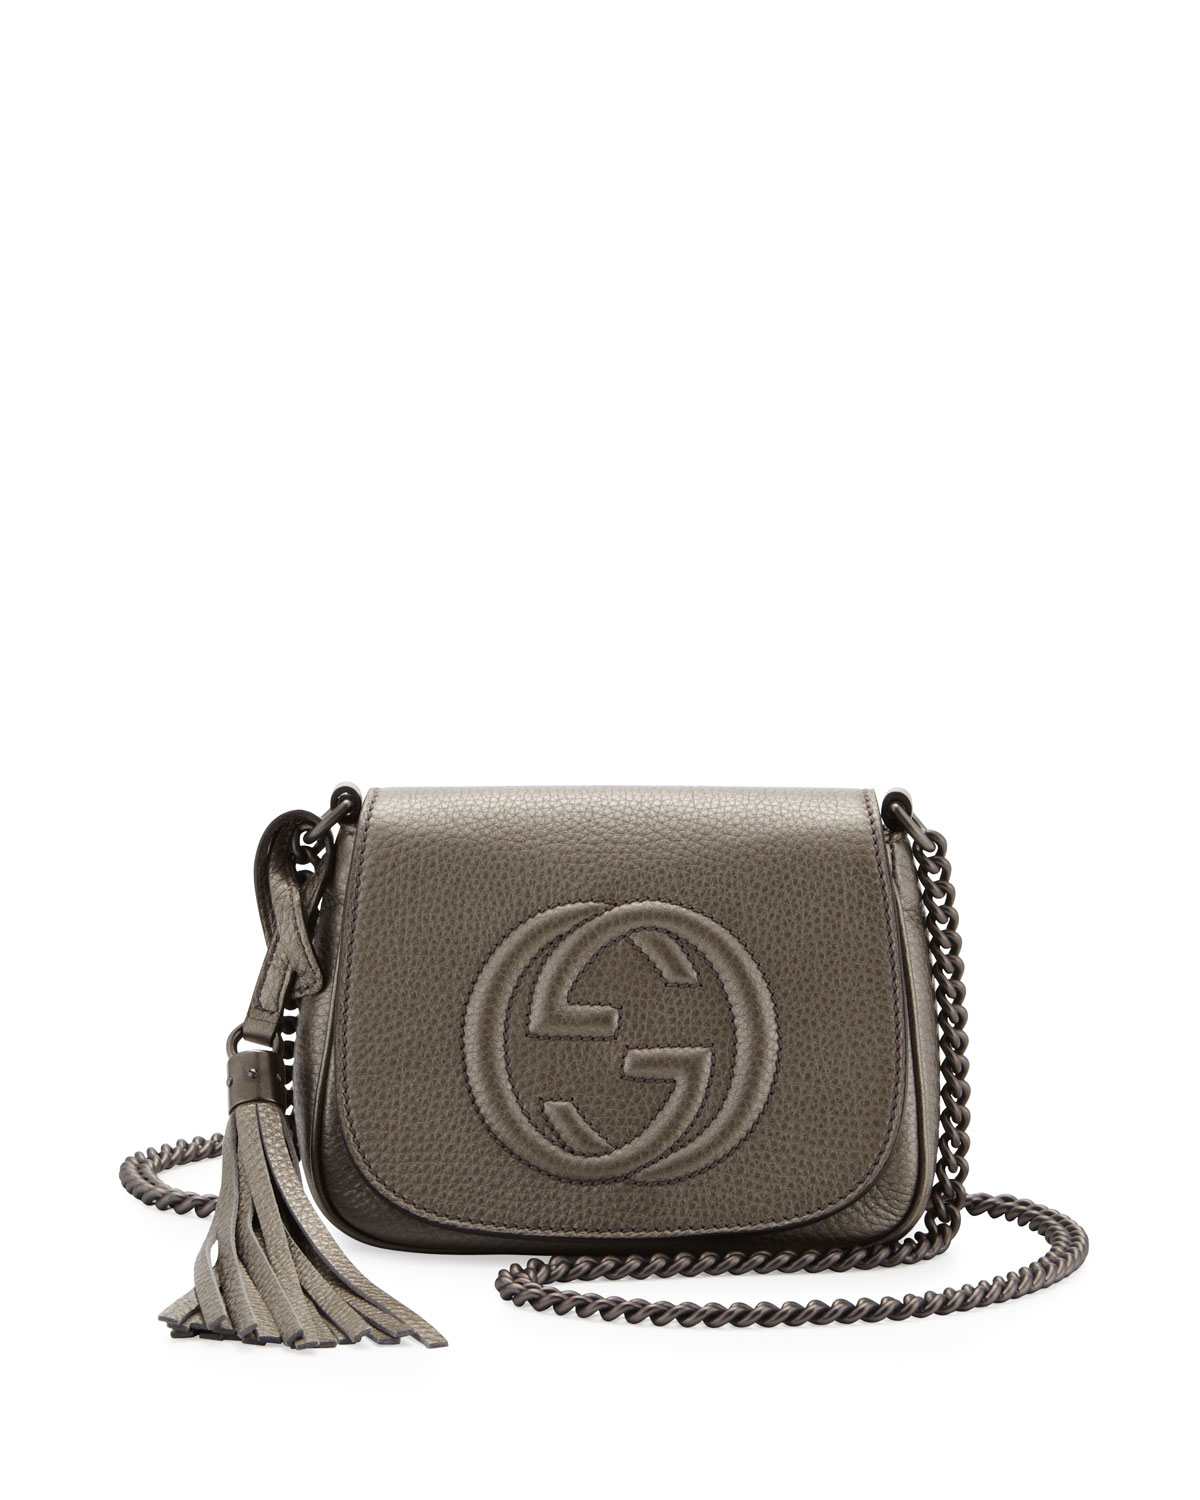 Gucci Soho Metallic Leather Chain Crossbody Bag in Gray (Gunmetal)